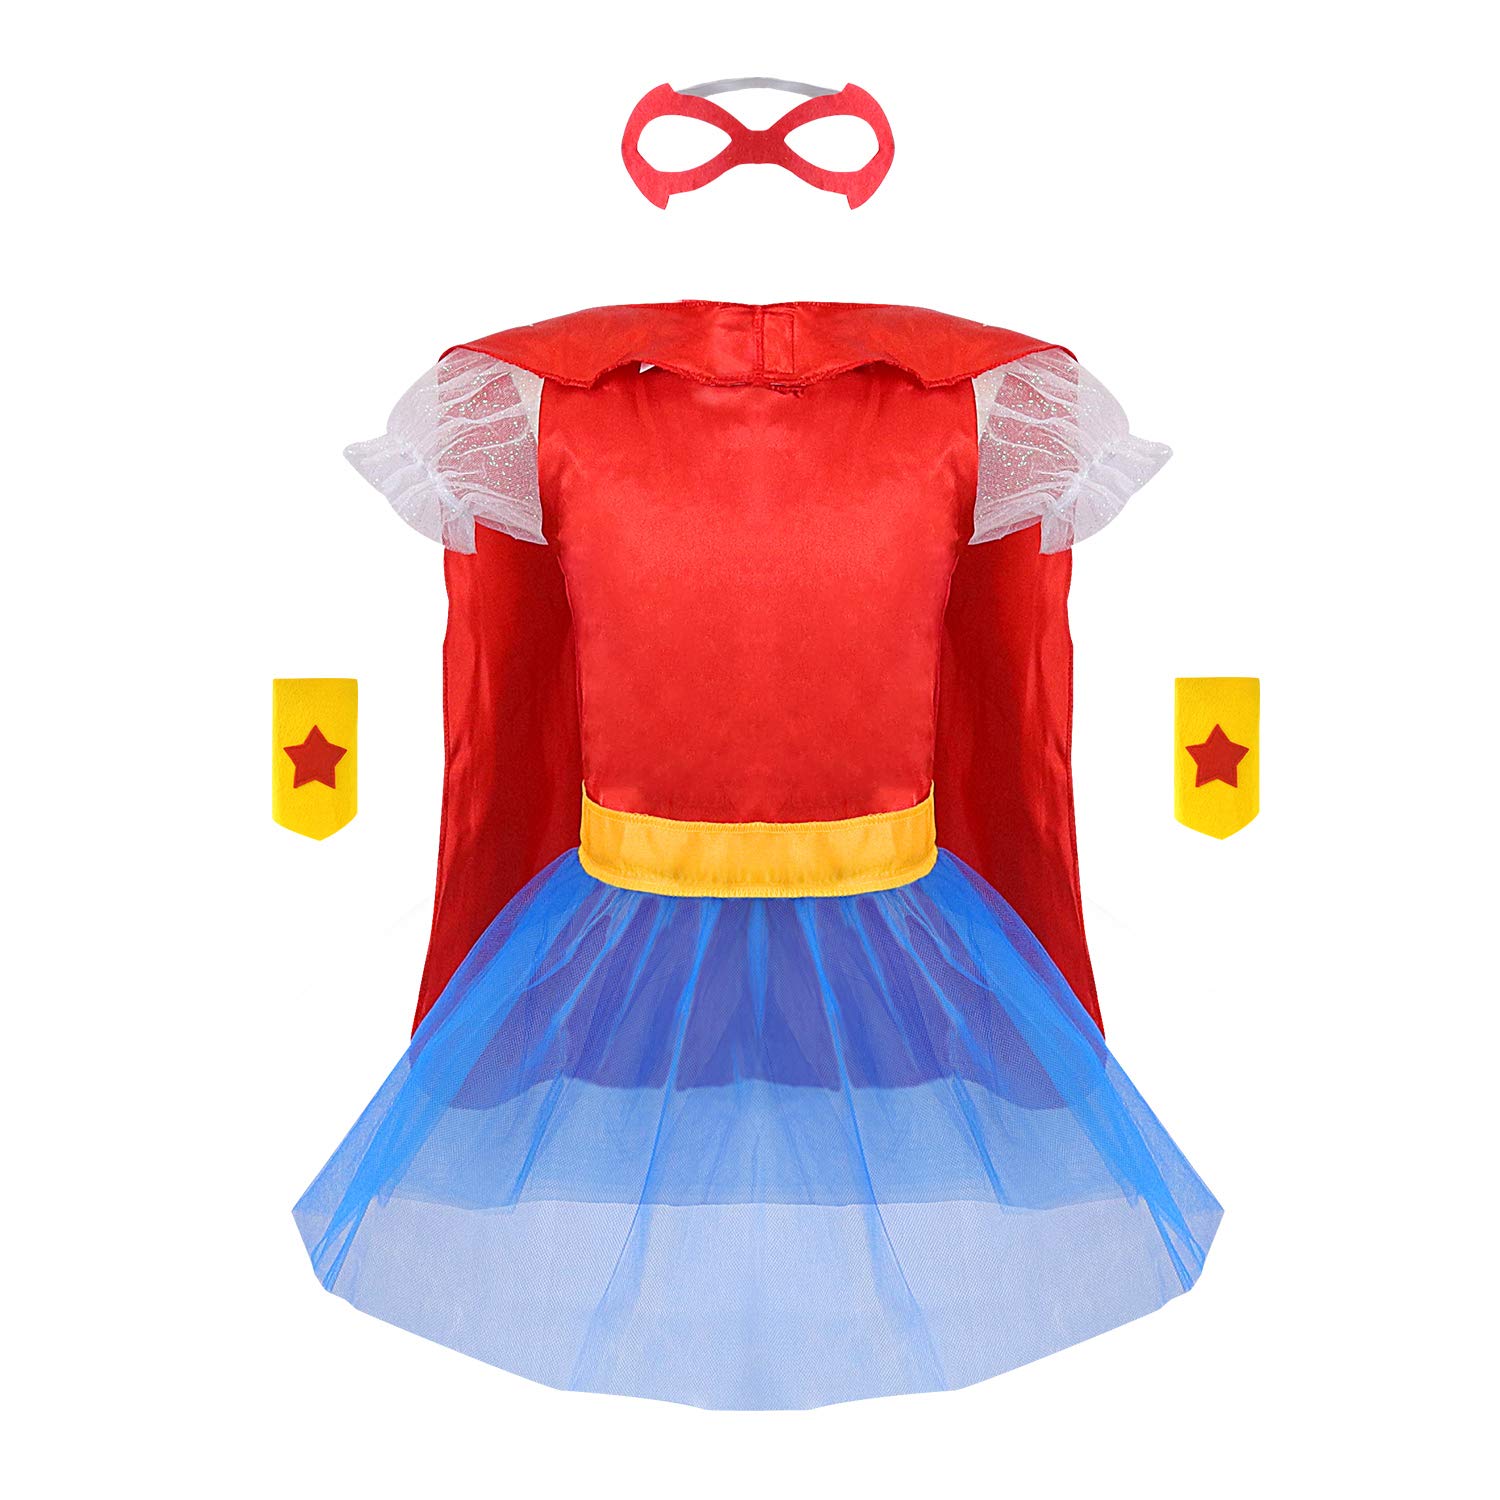 Jeowoqao Girls Dress up Trunk Princess Set, 24 PCS Pretend Play Costume Set, Fairytale, Supergirl, Princess, Rainbow Unicorn Costume for Toddler/Little Girls Ages 3-5yrs